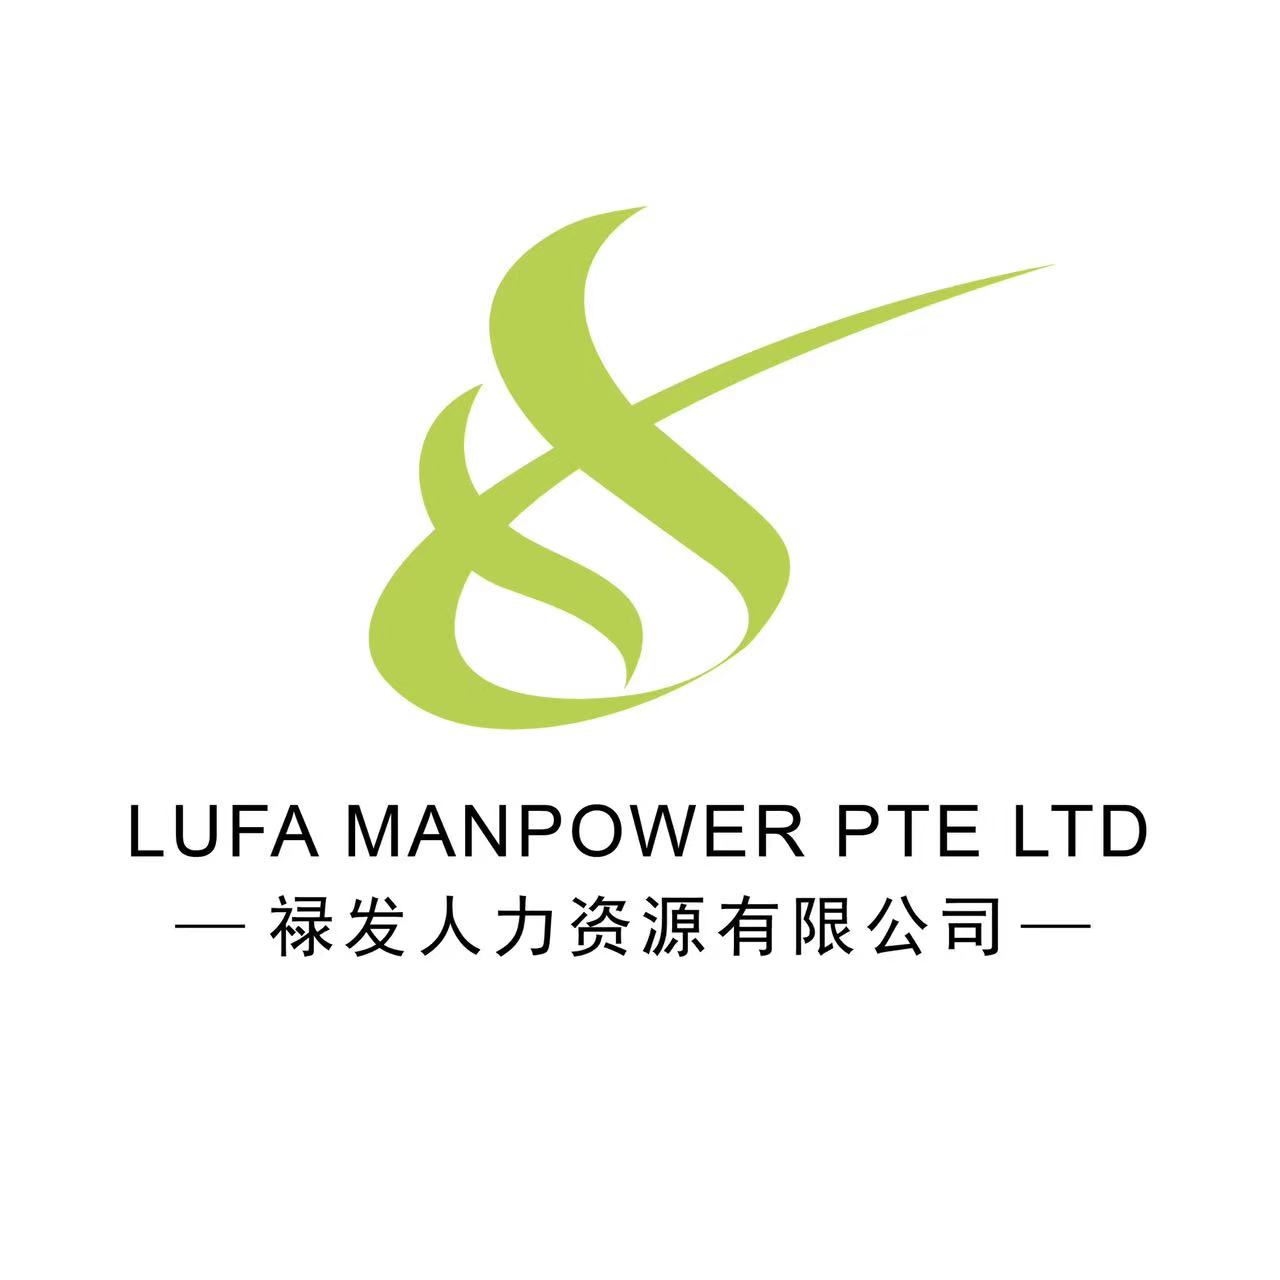 Company logo for Lufa Manpower Pte. Ltd.